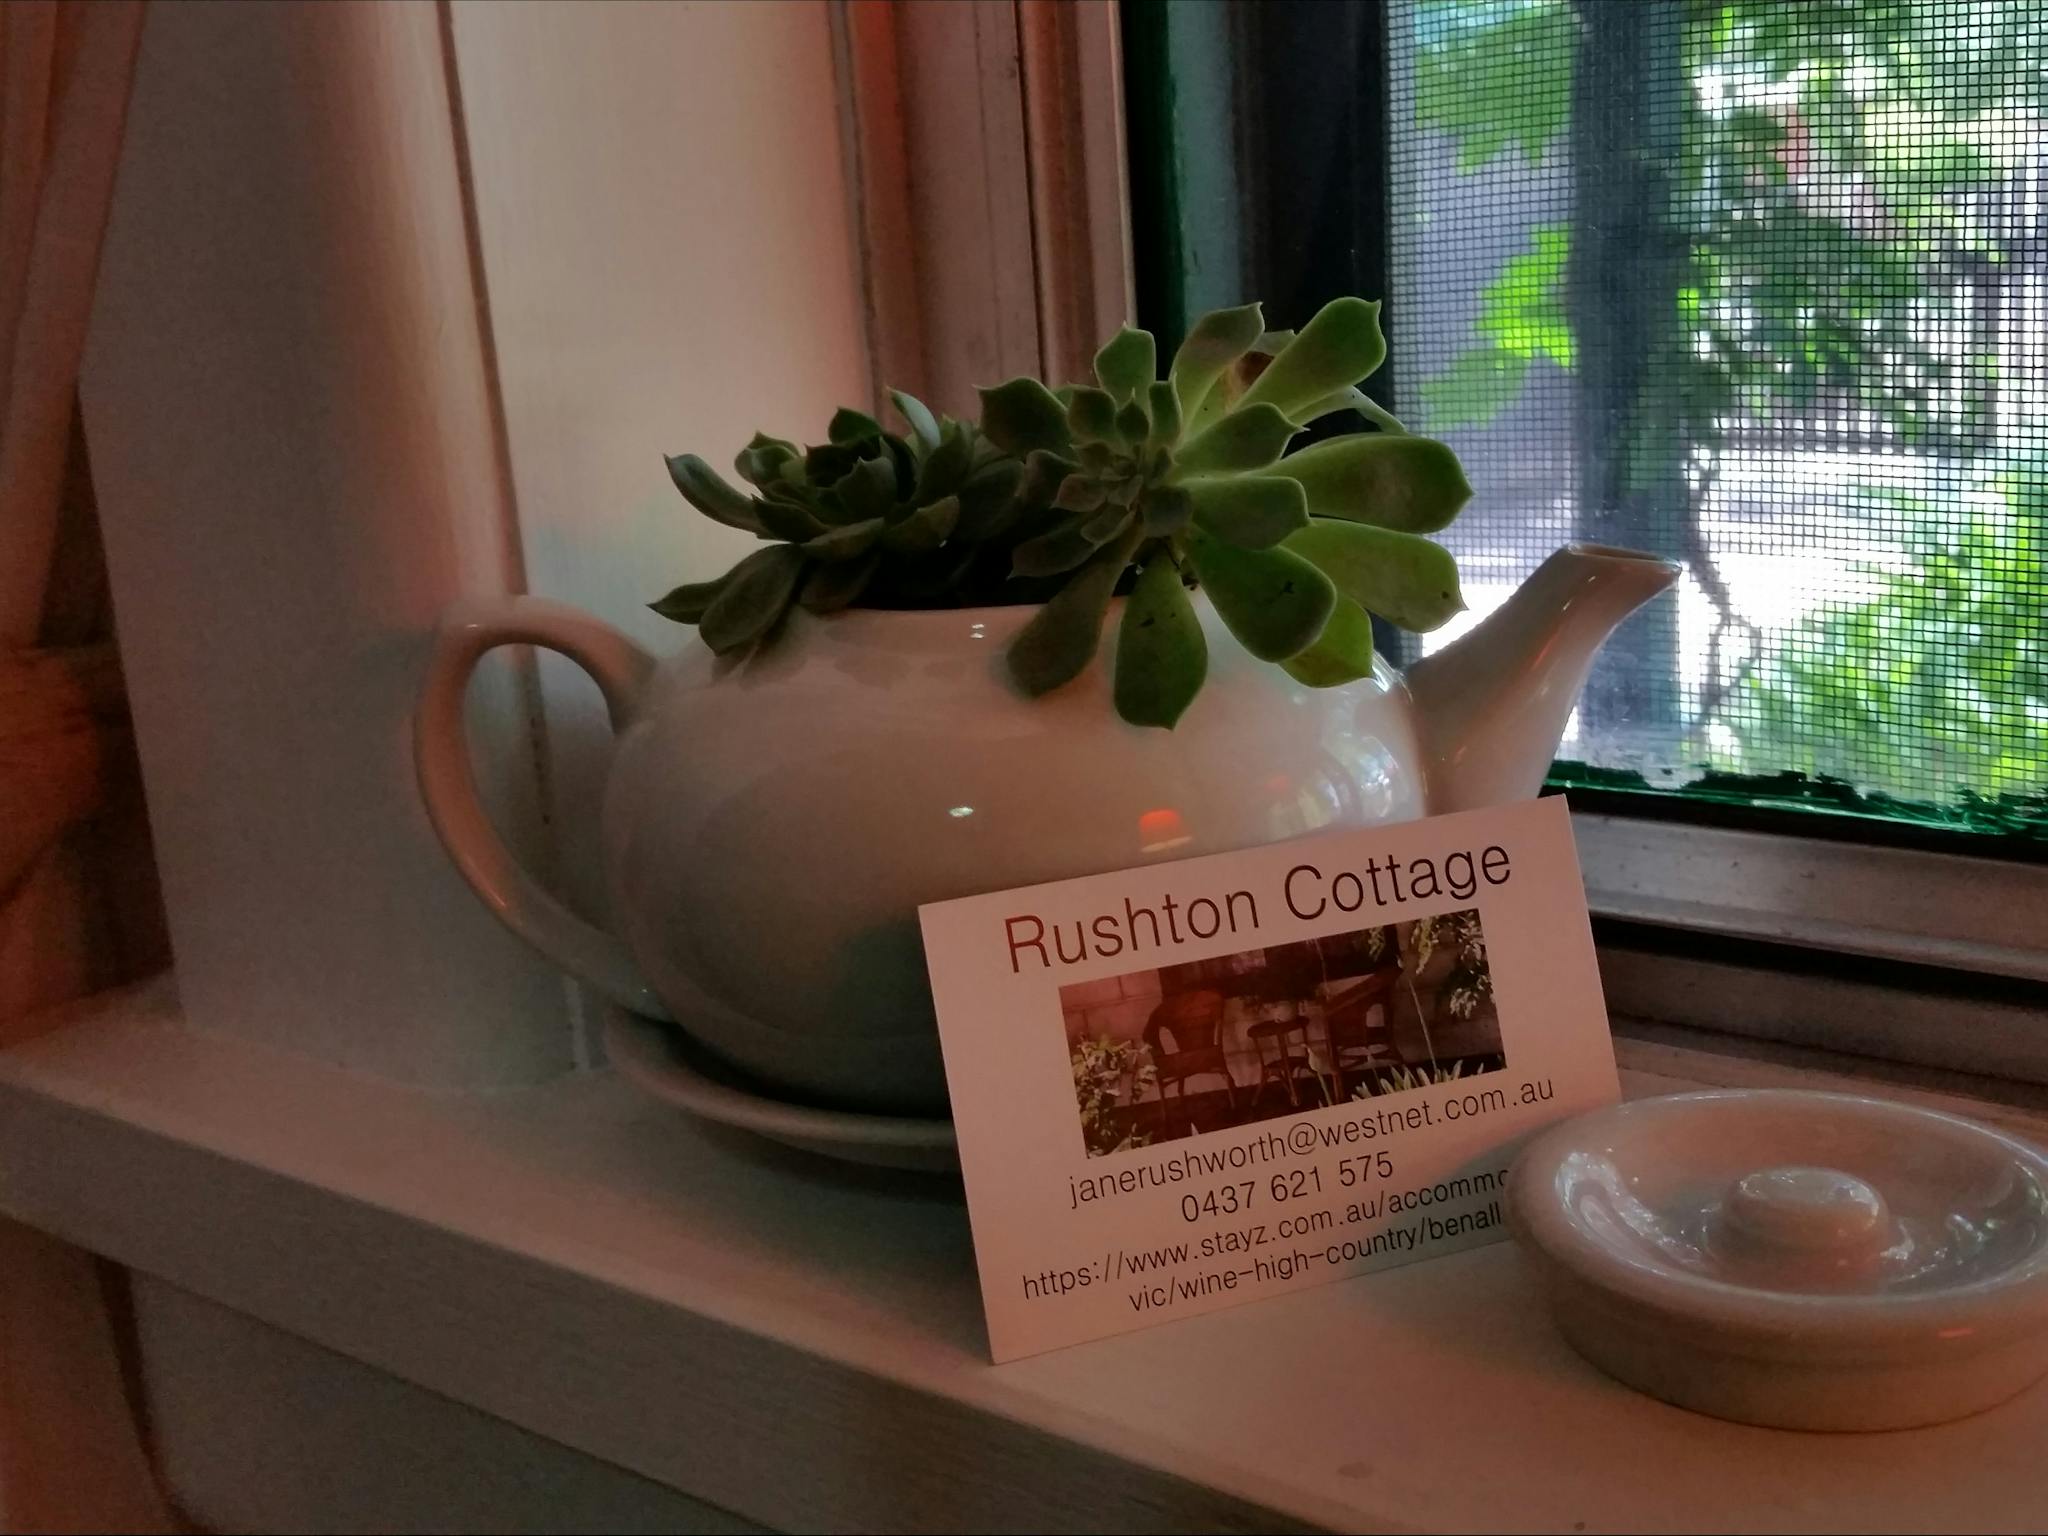 Rushton Cottage card and teapot